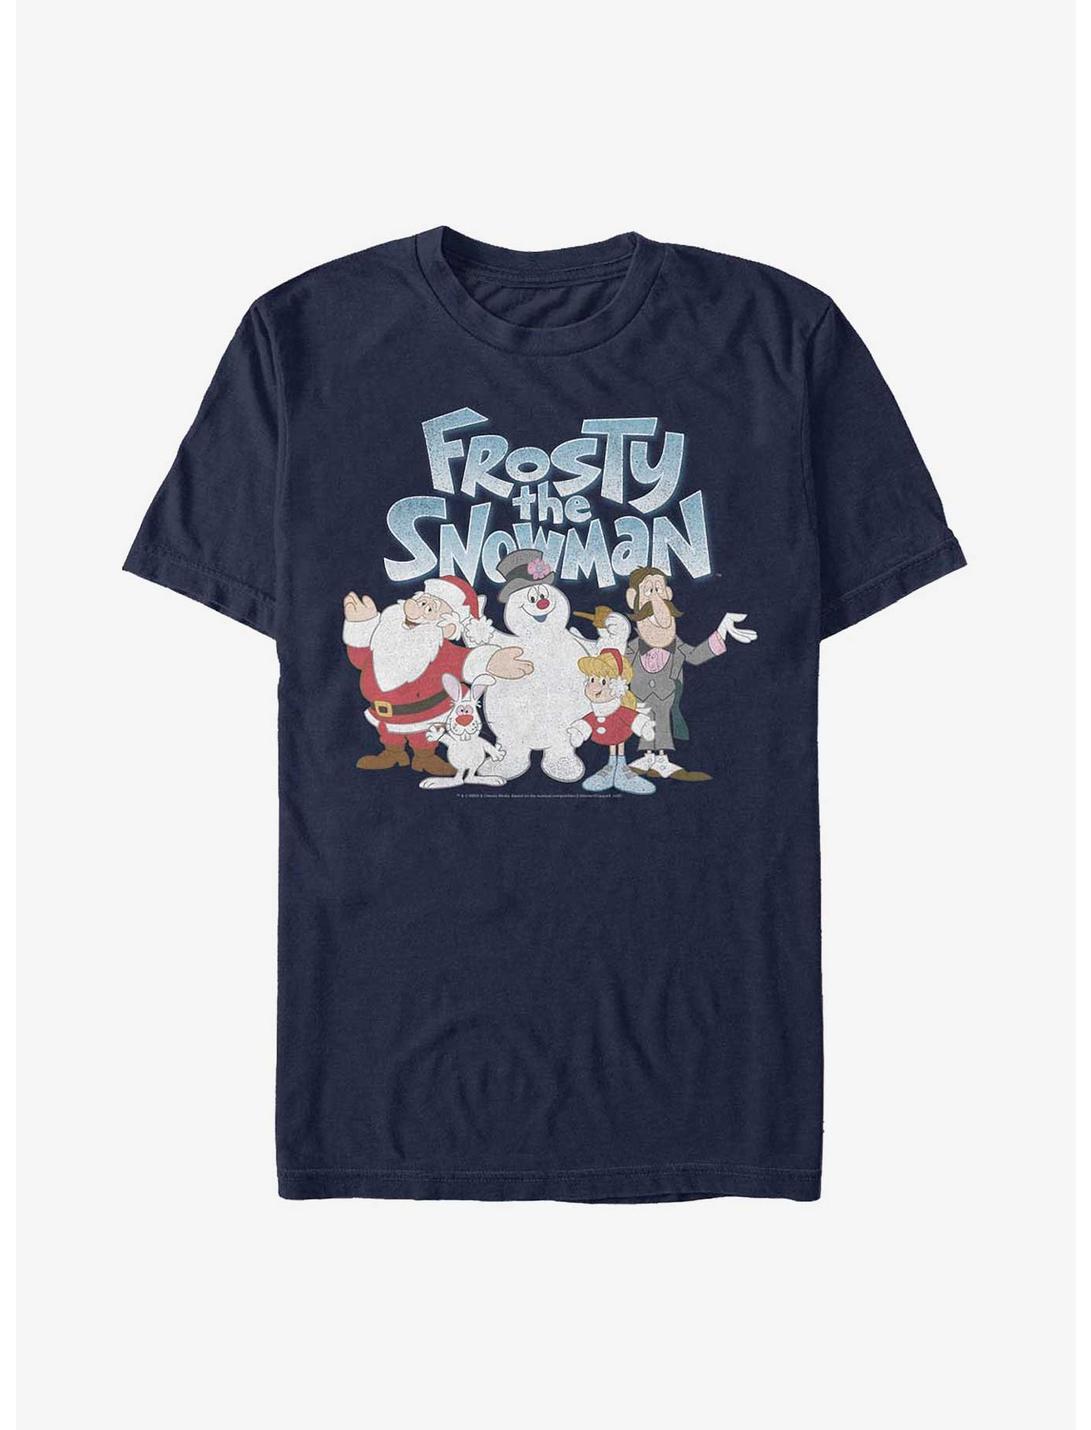 Frosty The Snowman Group Shot T-Shirt, NAVY, hi-res